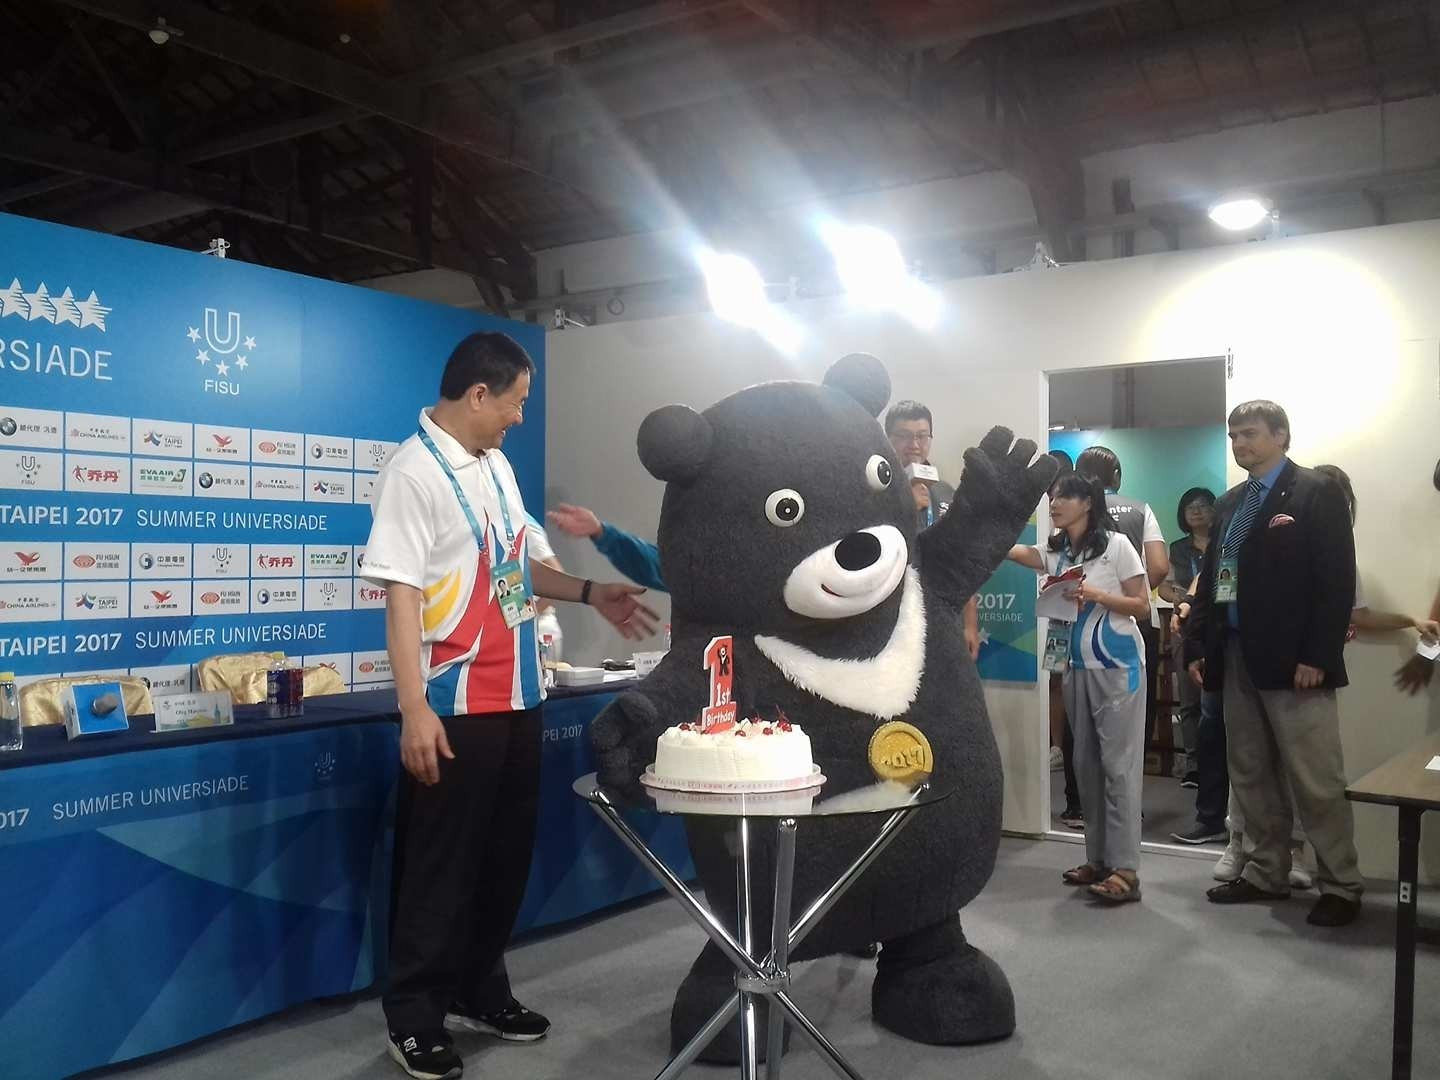 Taipei 2017 mascot in job hunt following conclusion of Summer Universiade